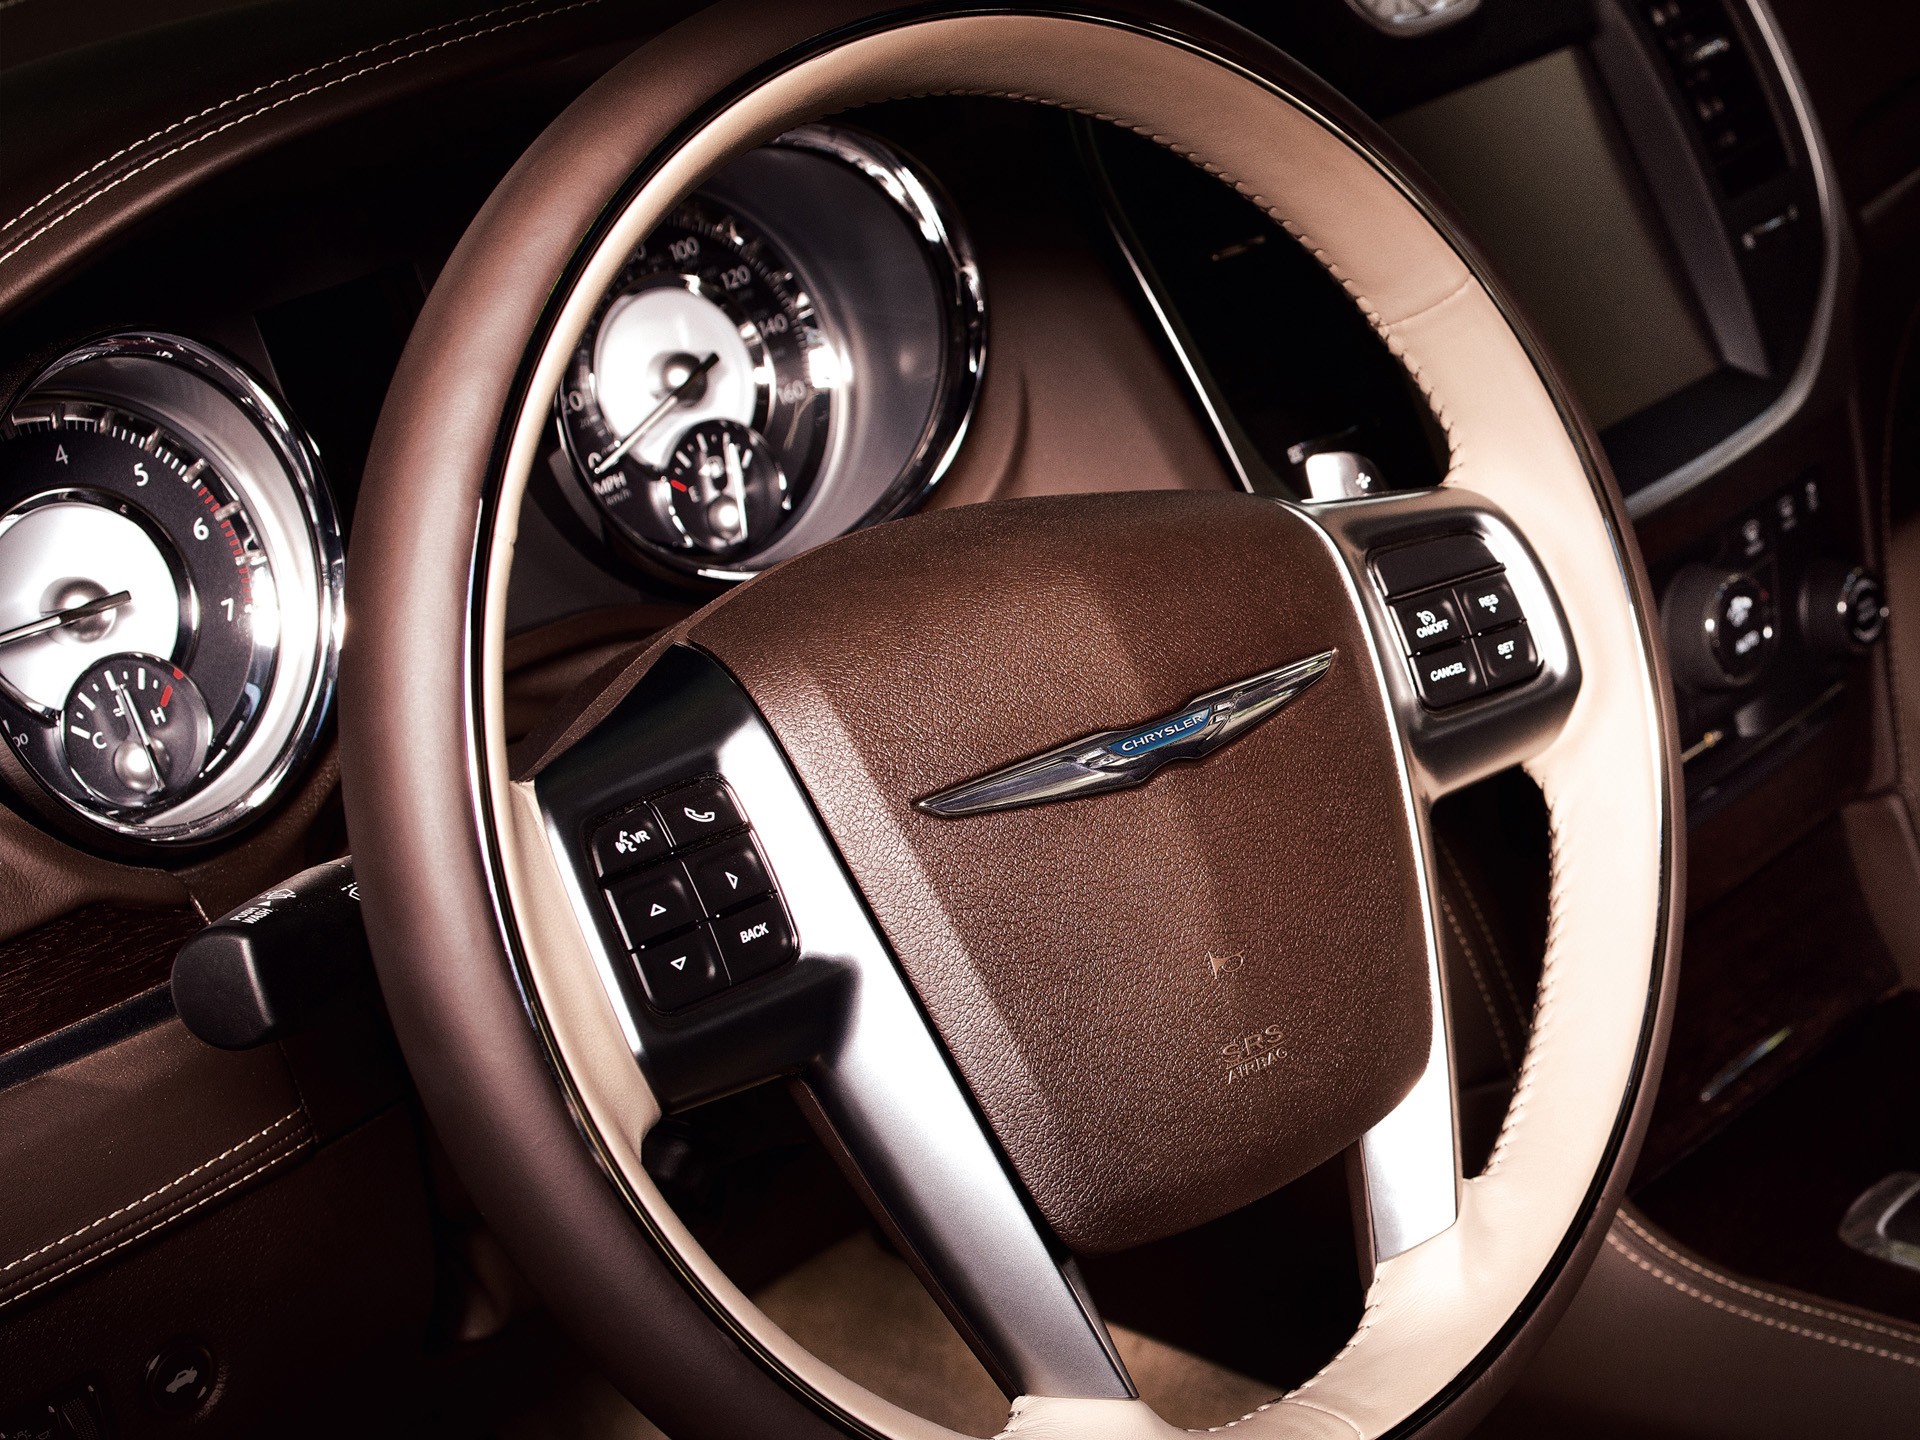 series, car interiors, steering wheel, Chrysler 300 - desktop wallpaper